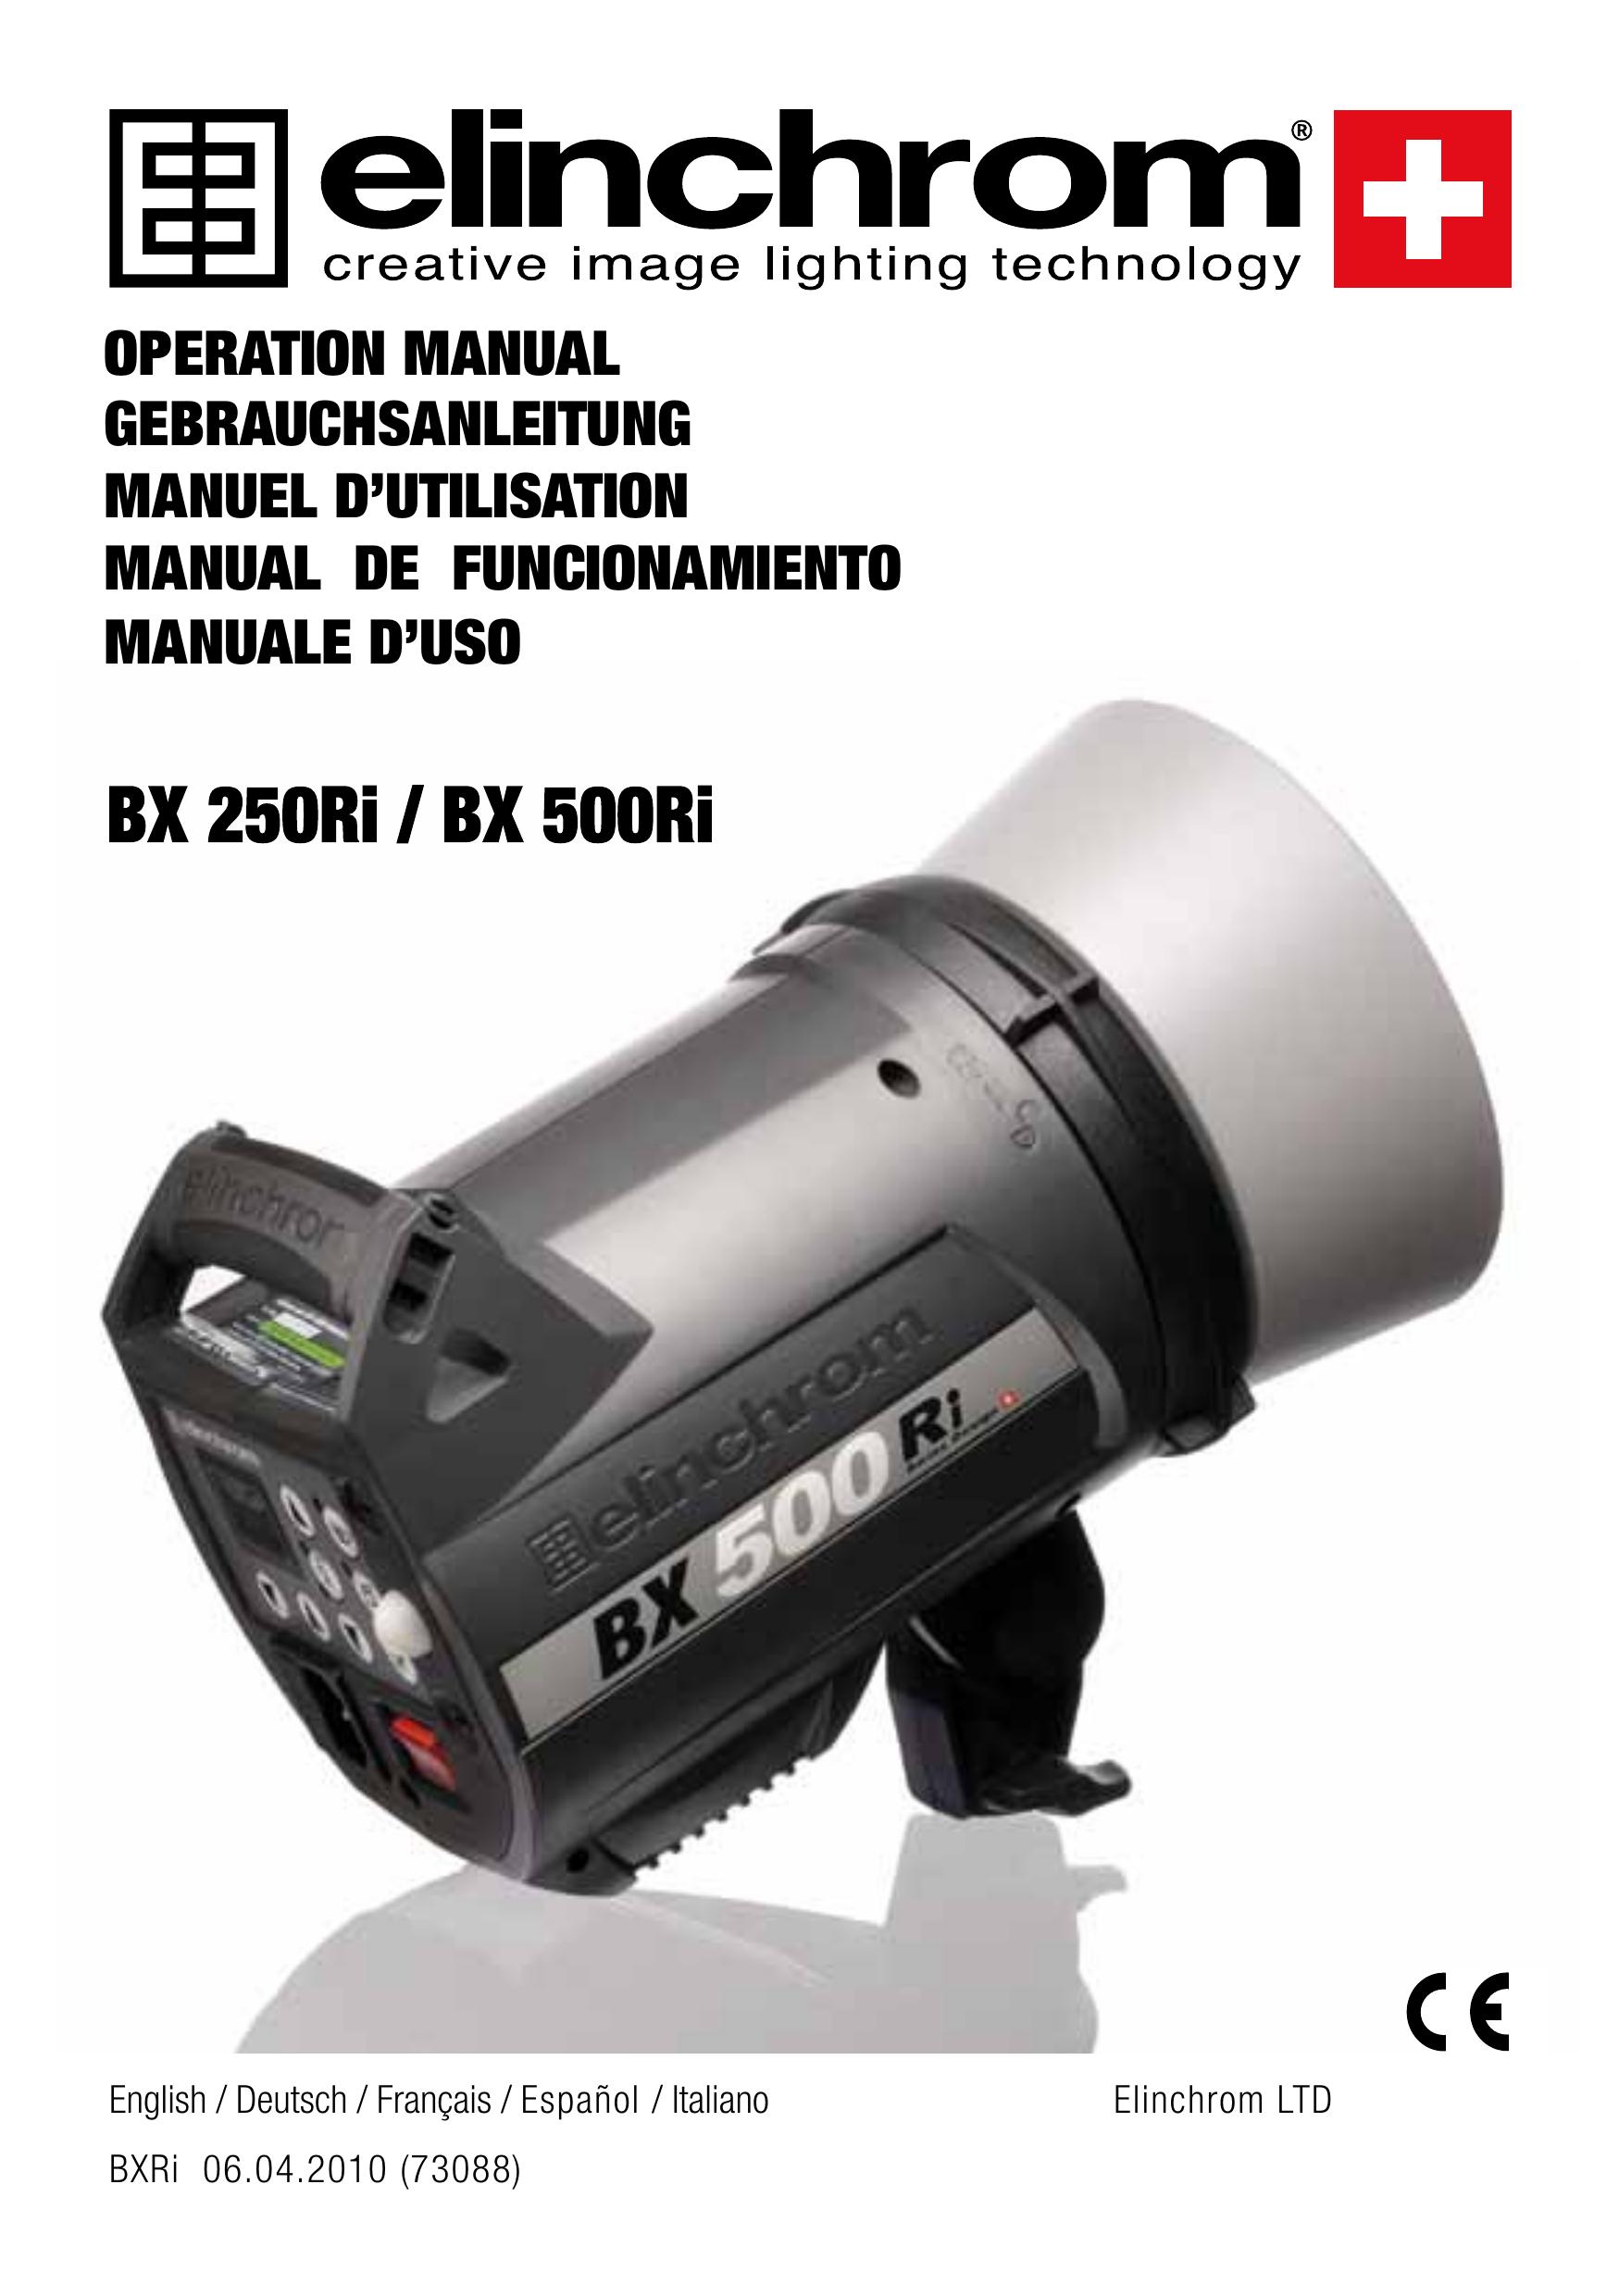 Elinchrom BX 500RI Camera Accessories User Manual